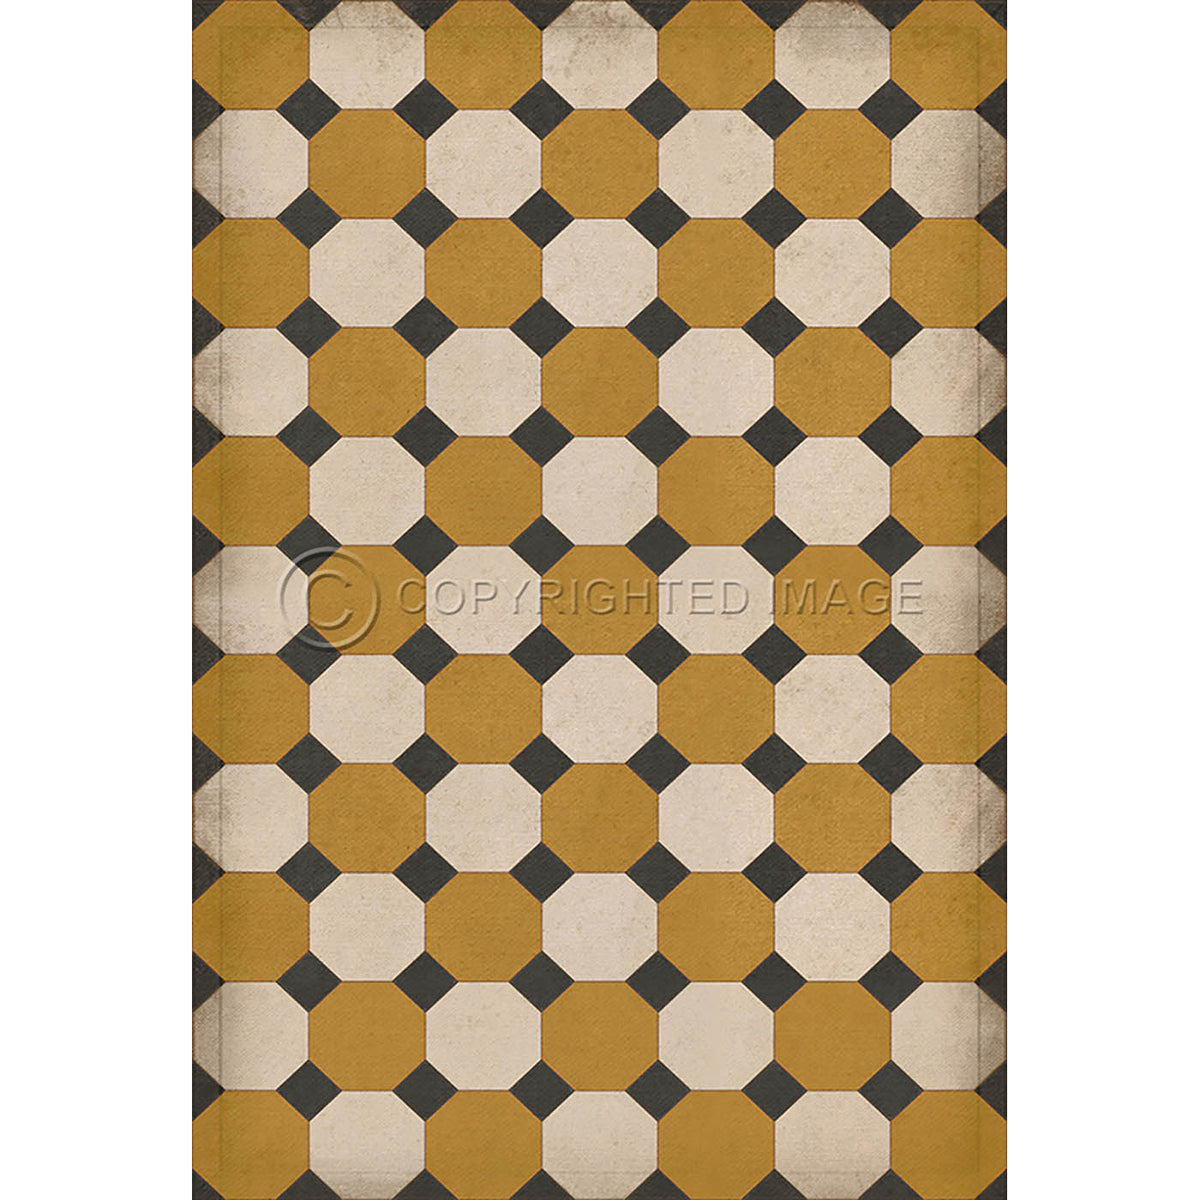 Octagons Jefferson 38x56